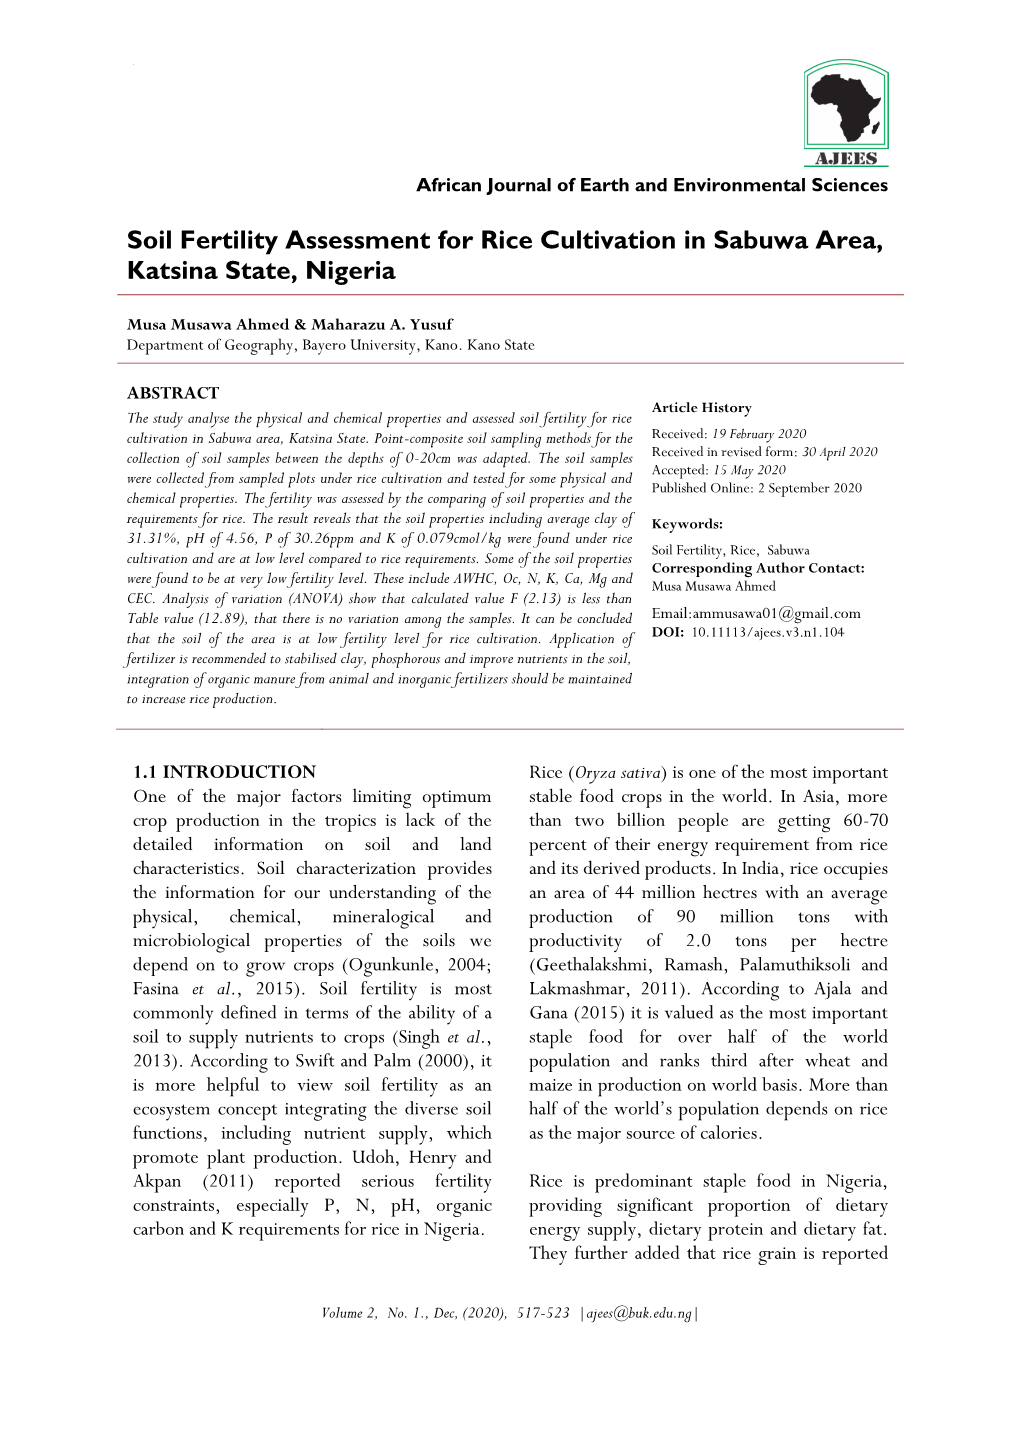 Soil Fertility Assessment for Rice Cultivation in Sabuwa Area, Katsina State, Nigeria